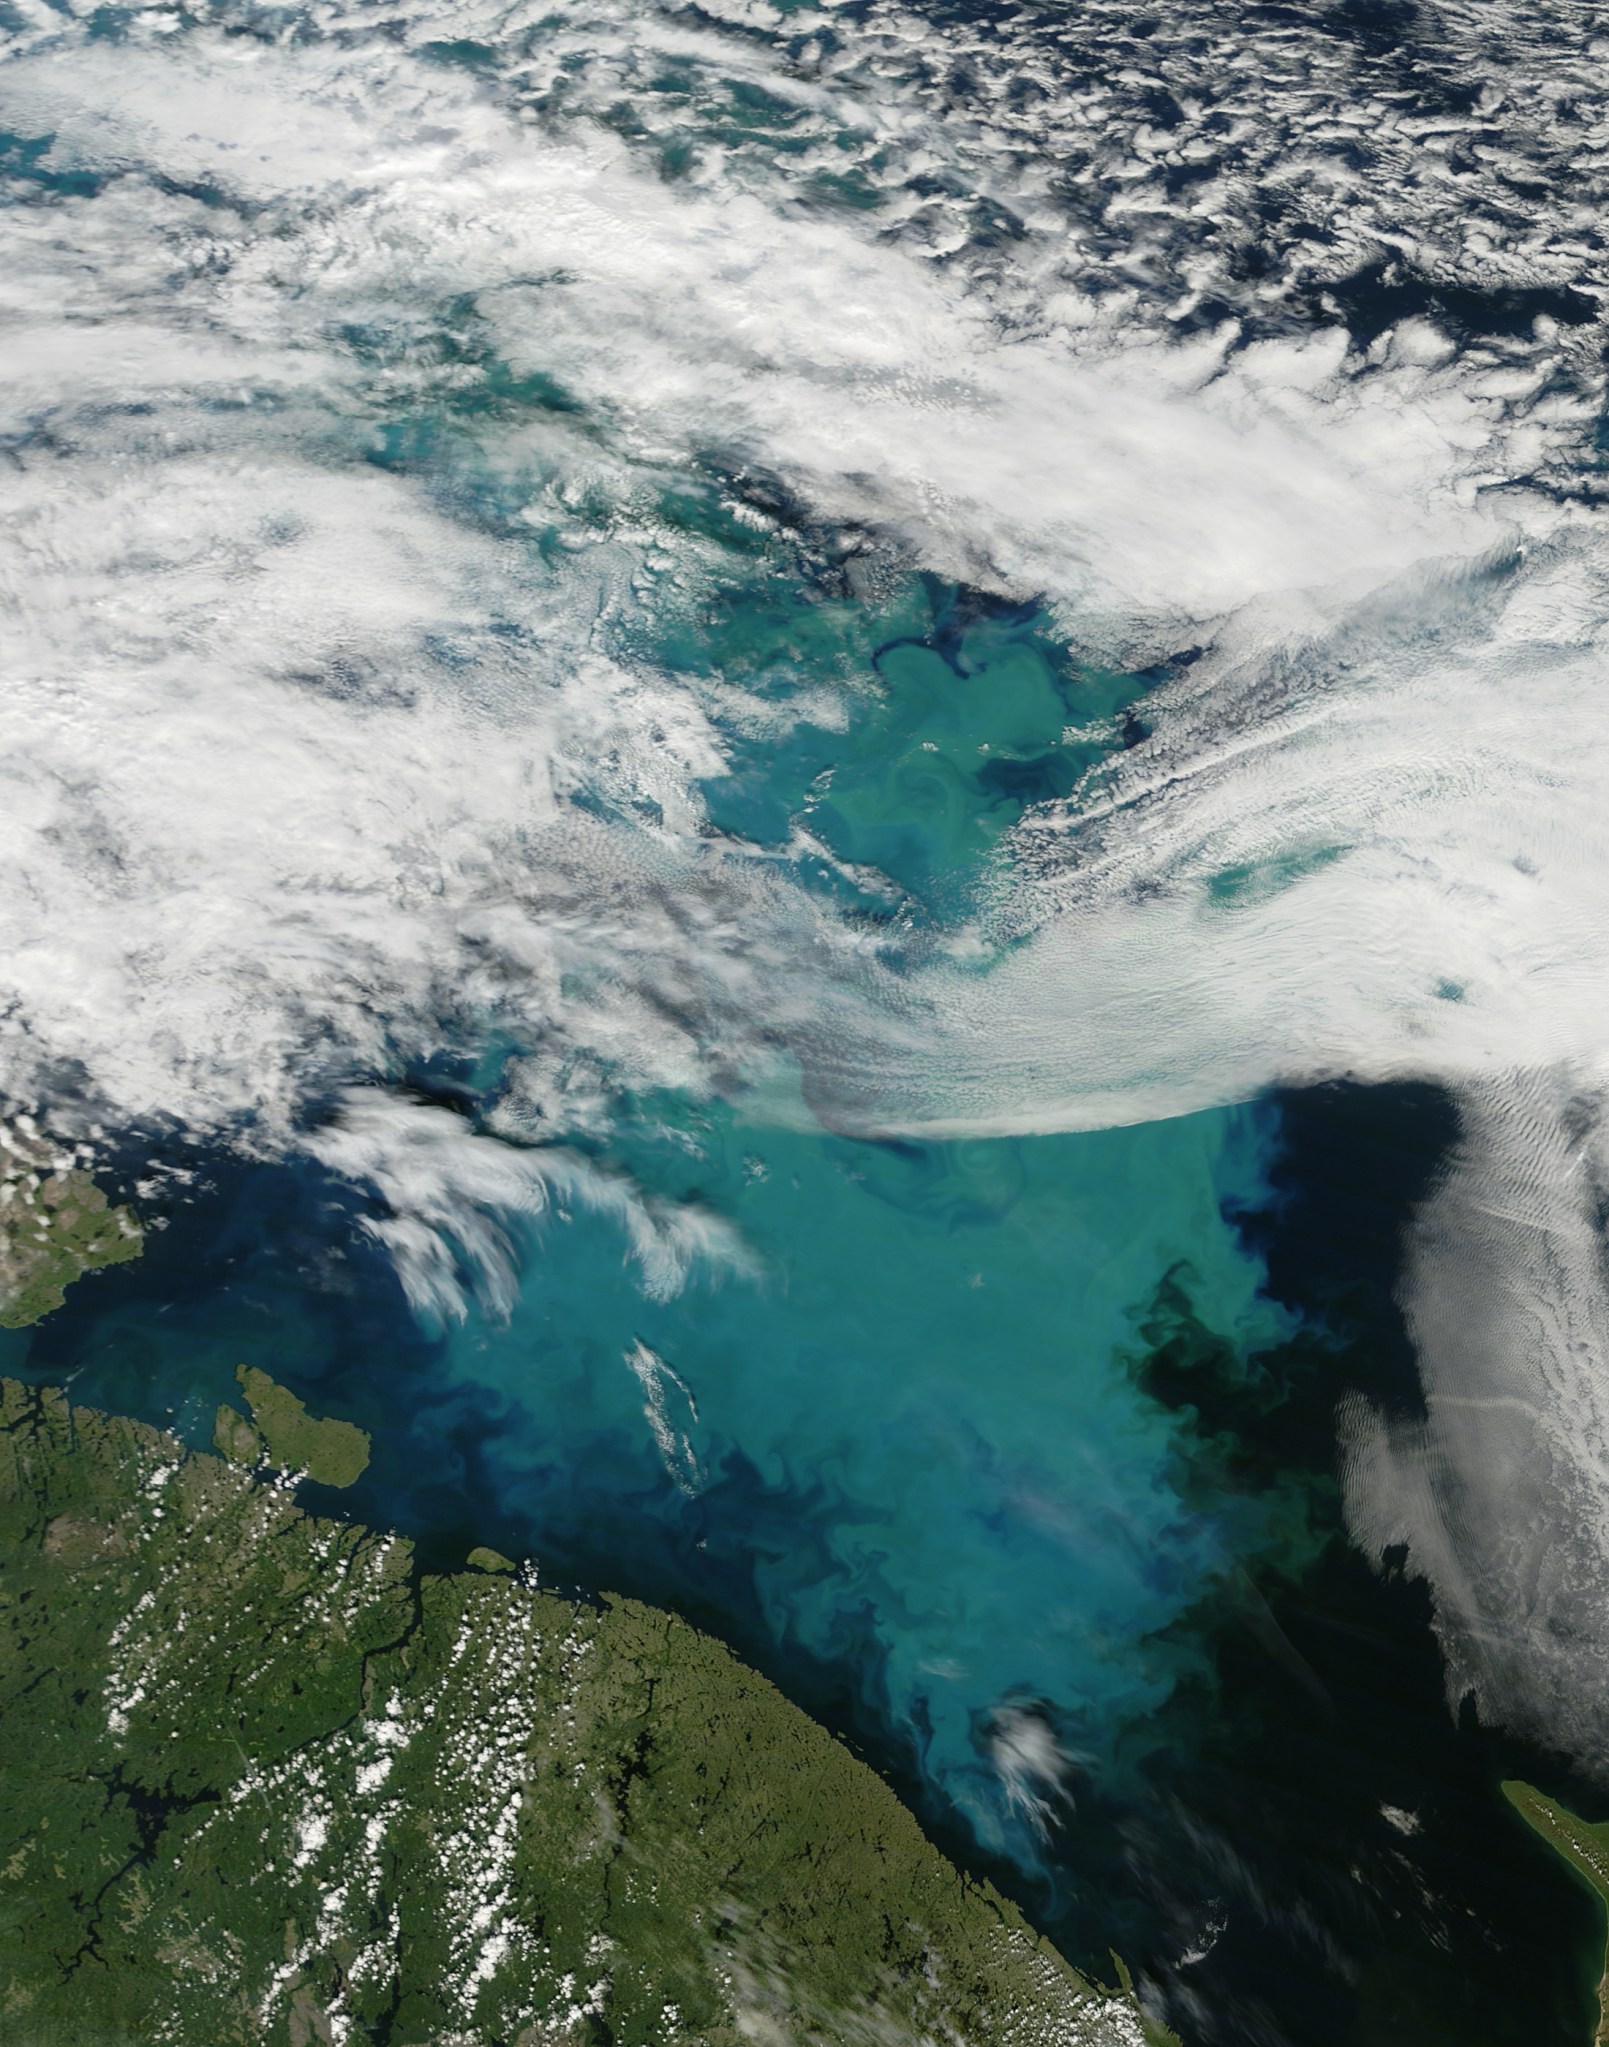 Aqua satellite image of Barents Sea, north of the Scandinavian Peninsula